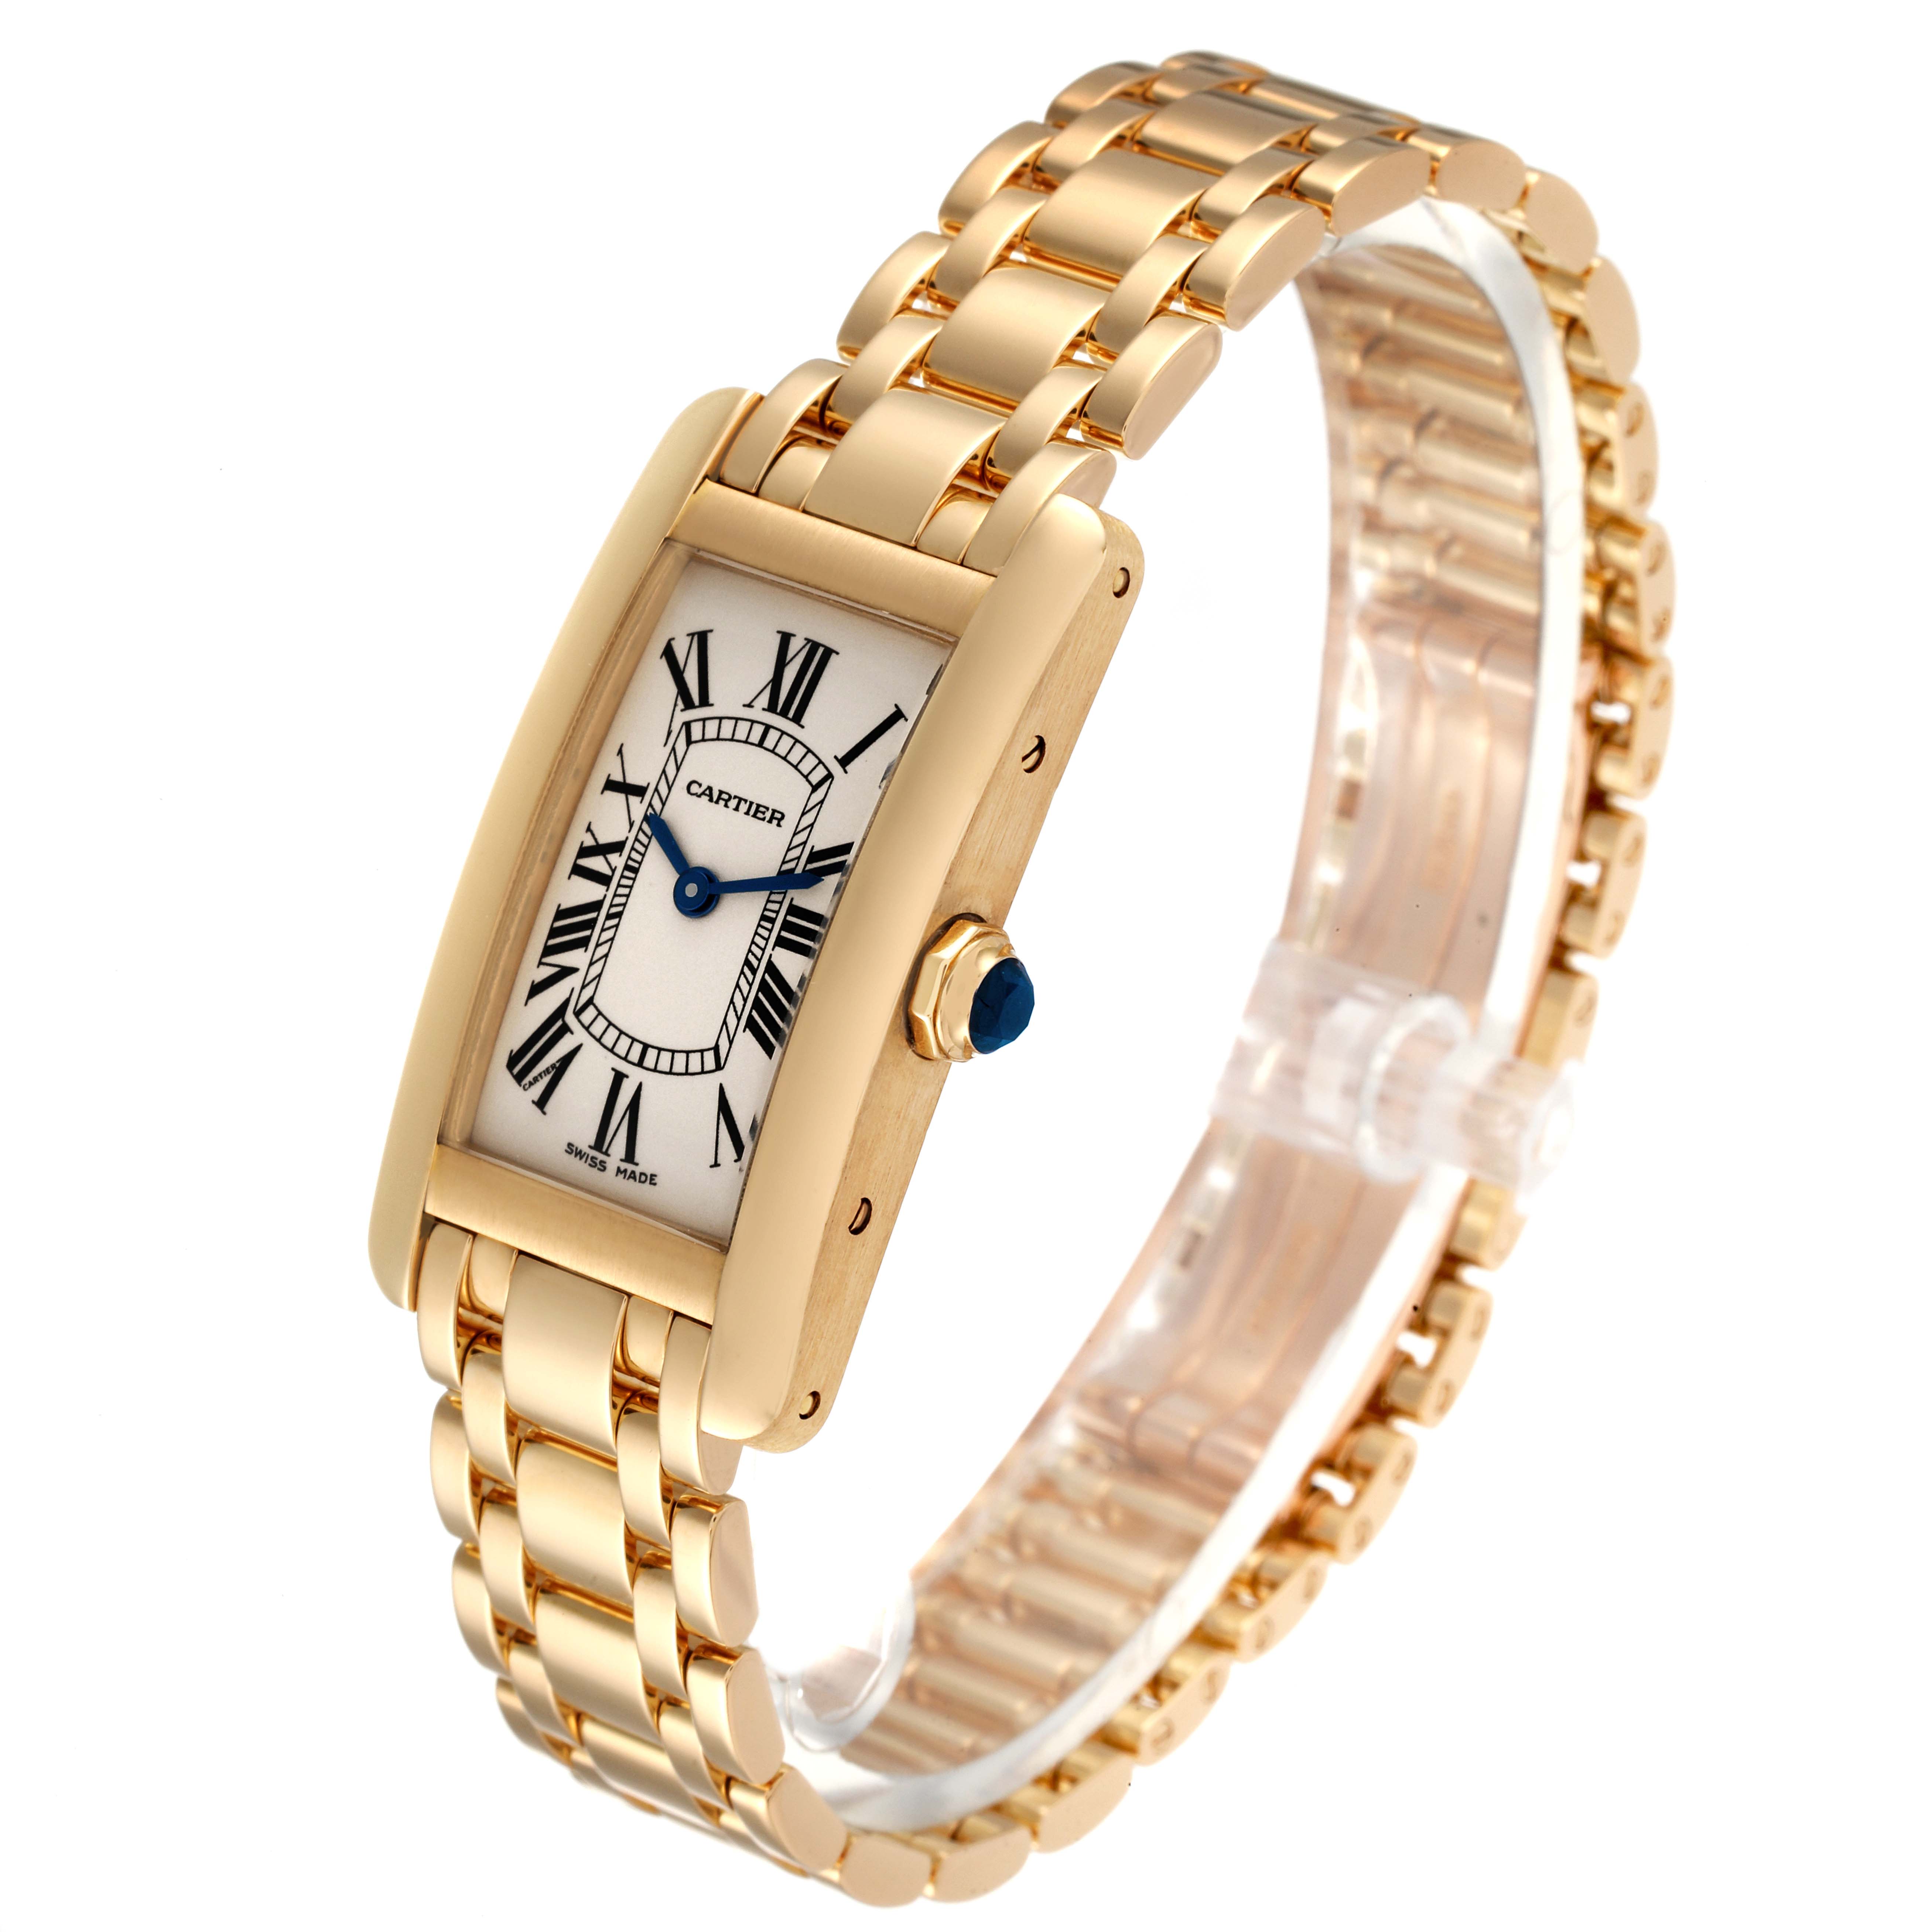 Cartier Tank Americaine 18K Yellow Gold Ladies Watch W26015K2 ...